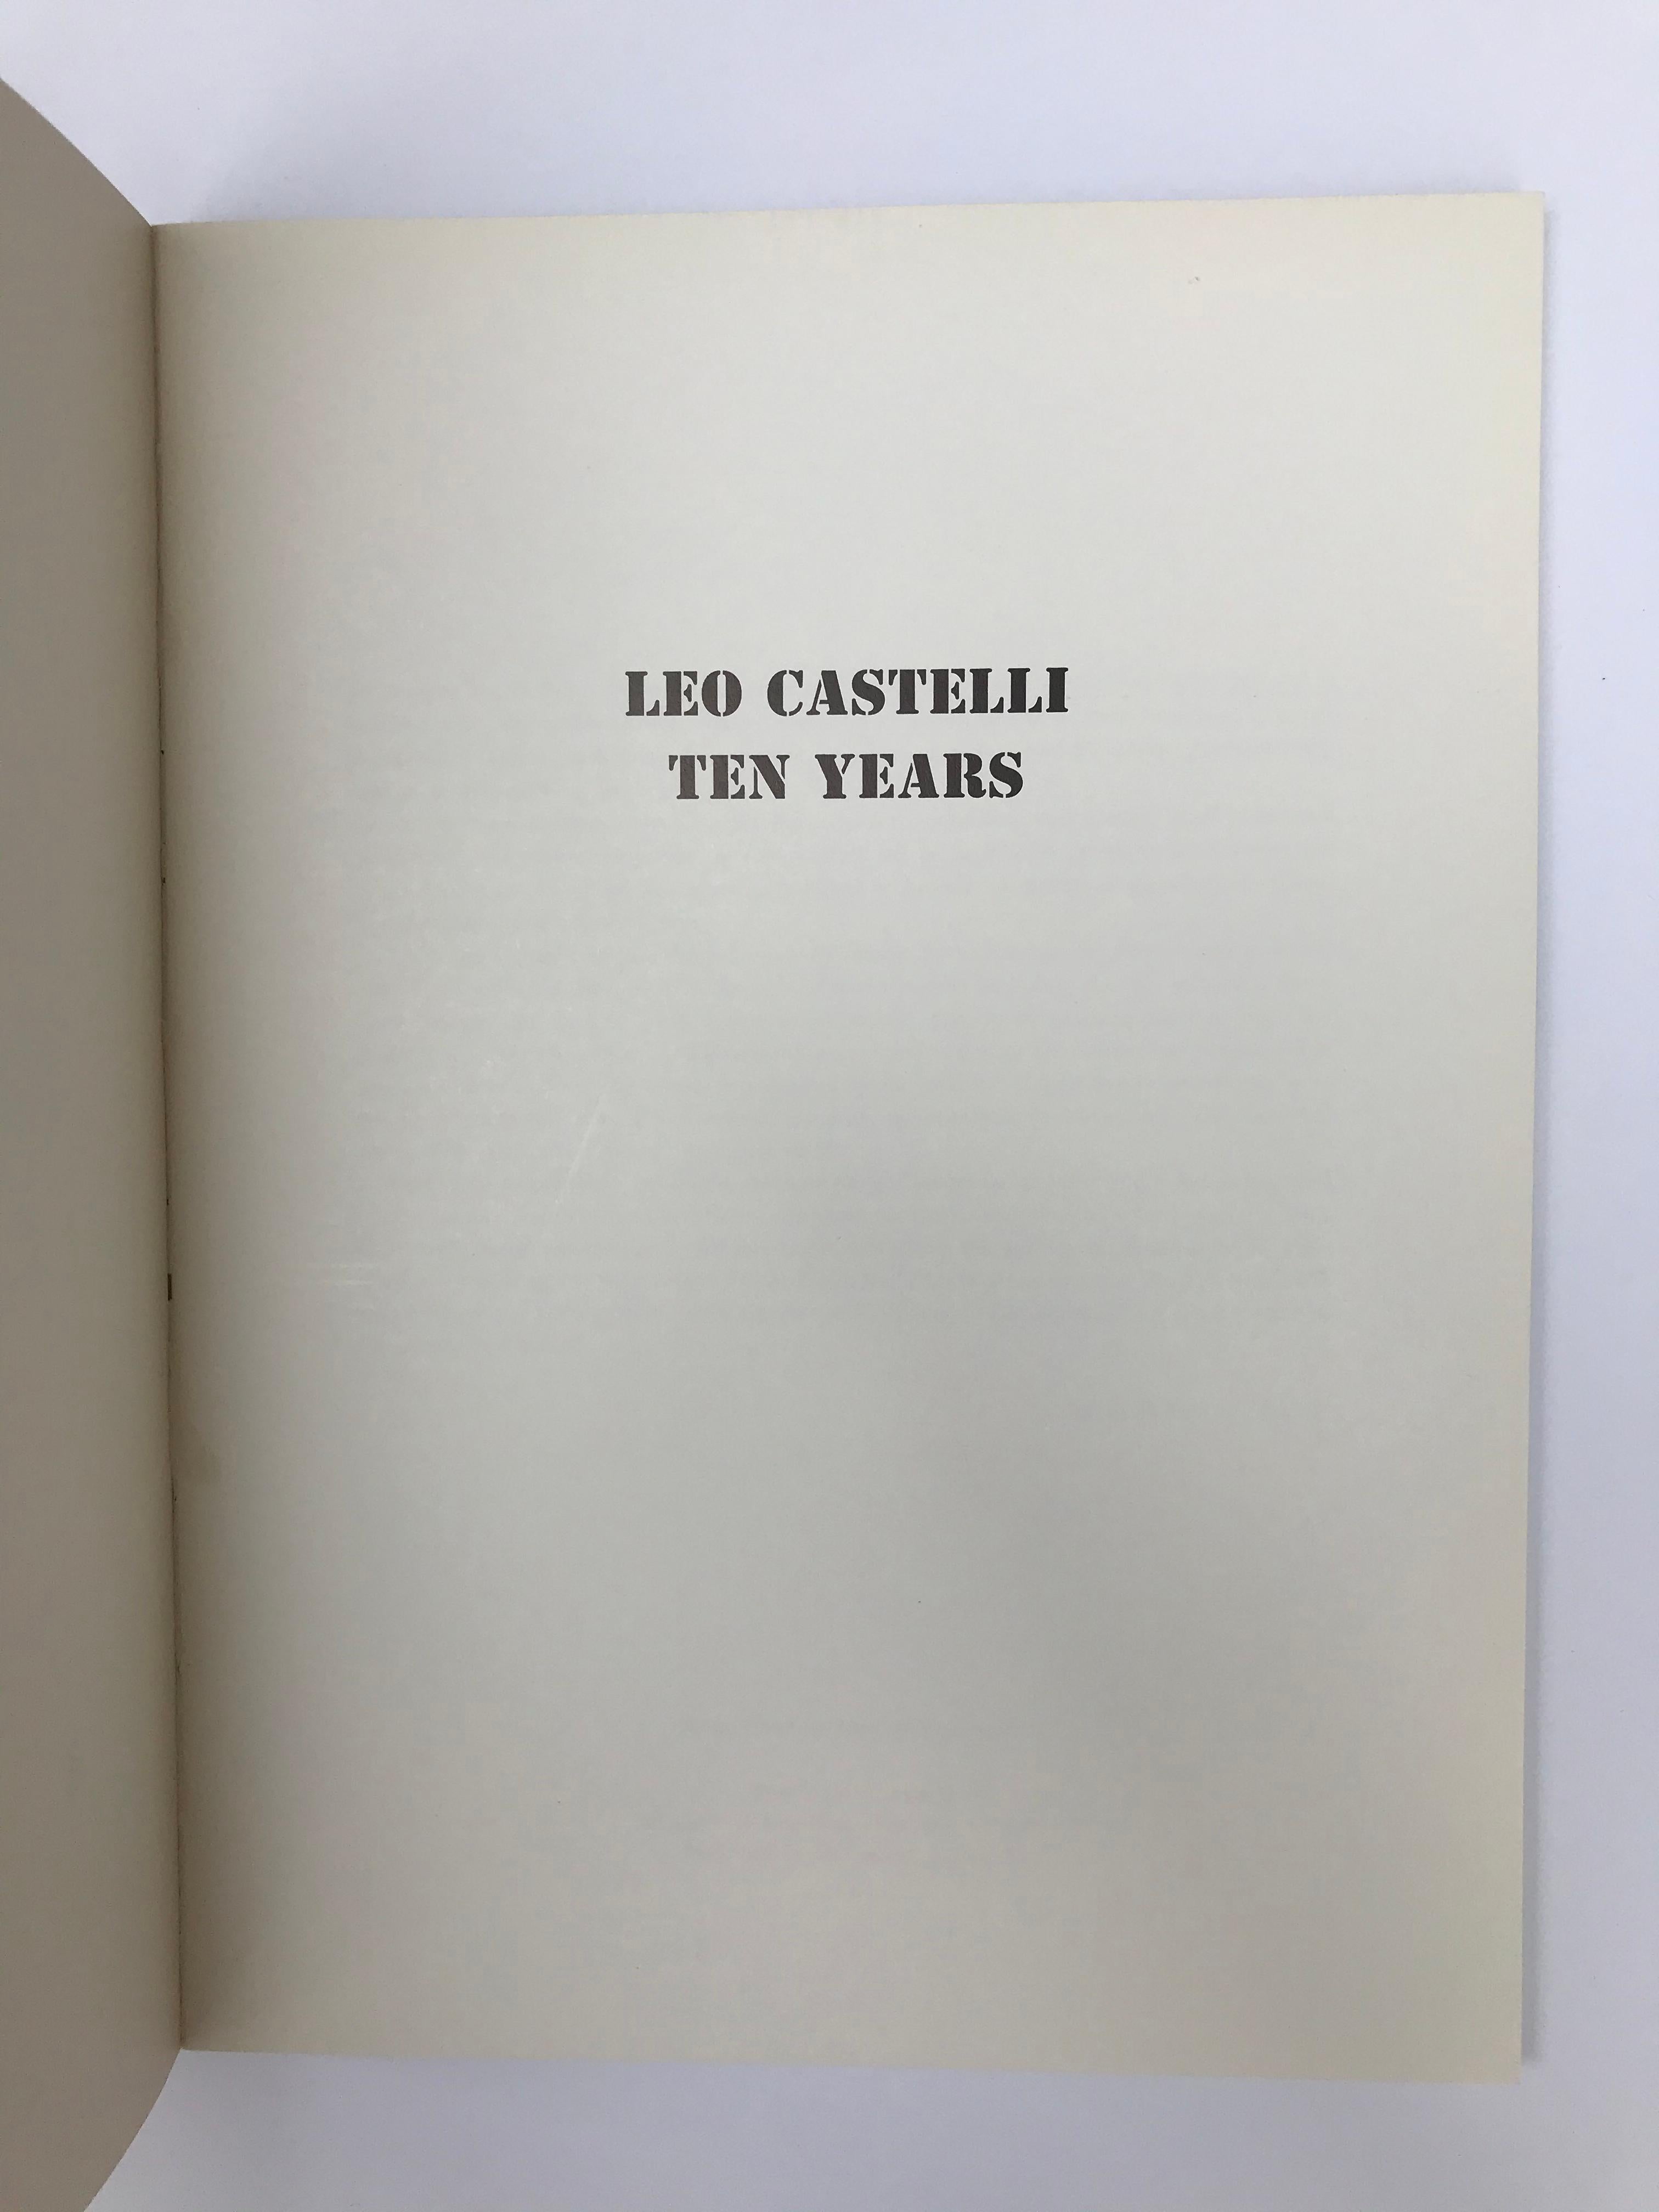 Leo Castelli Ten Years, 1967; Edited by David Whitney - Print by Andy Warhol and Roy Lichtenstein